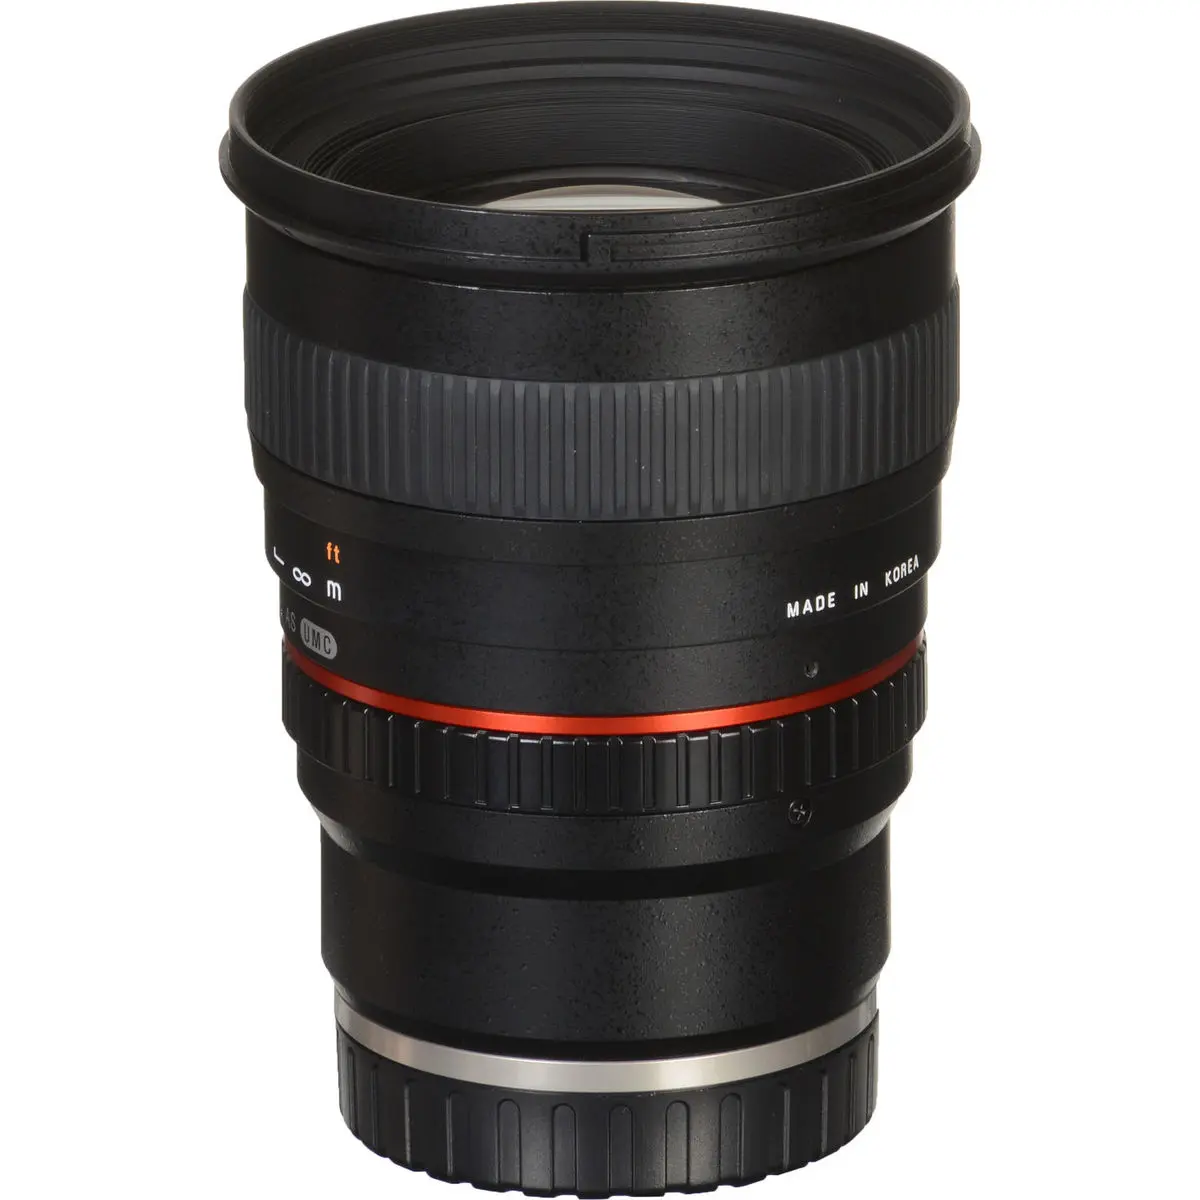 10. Samyang 50 mm f/1.4 AS UMC (Sony A) Lens